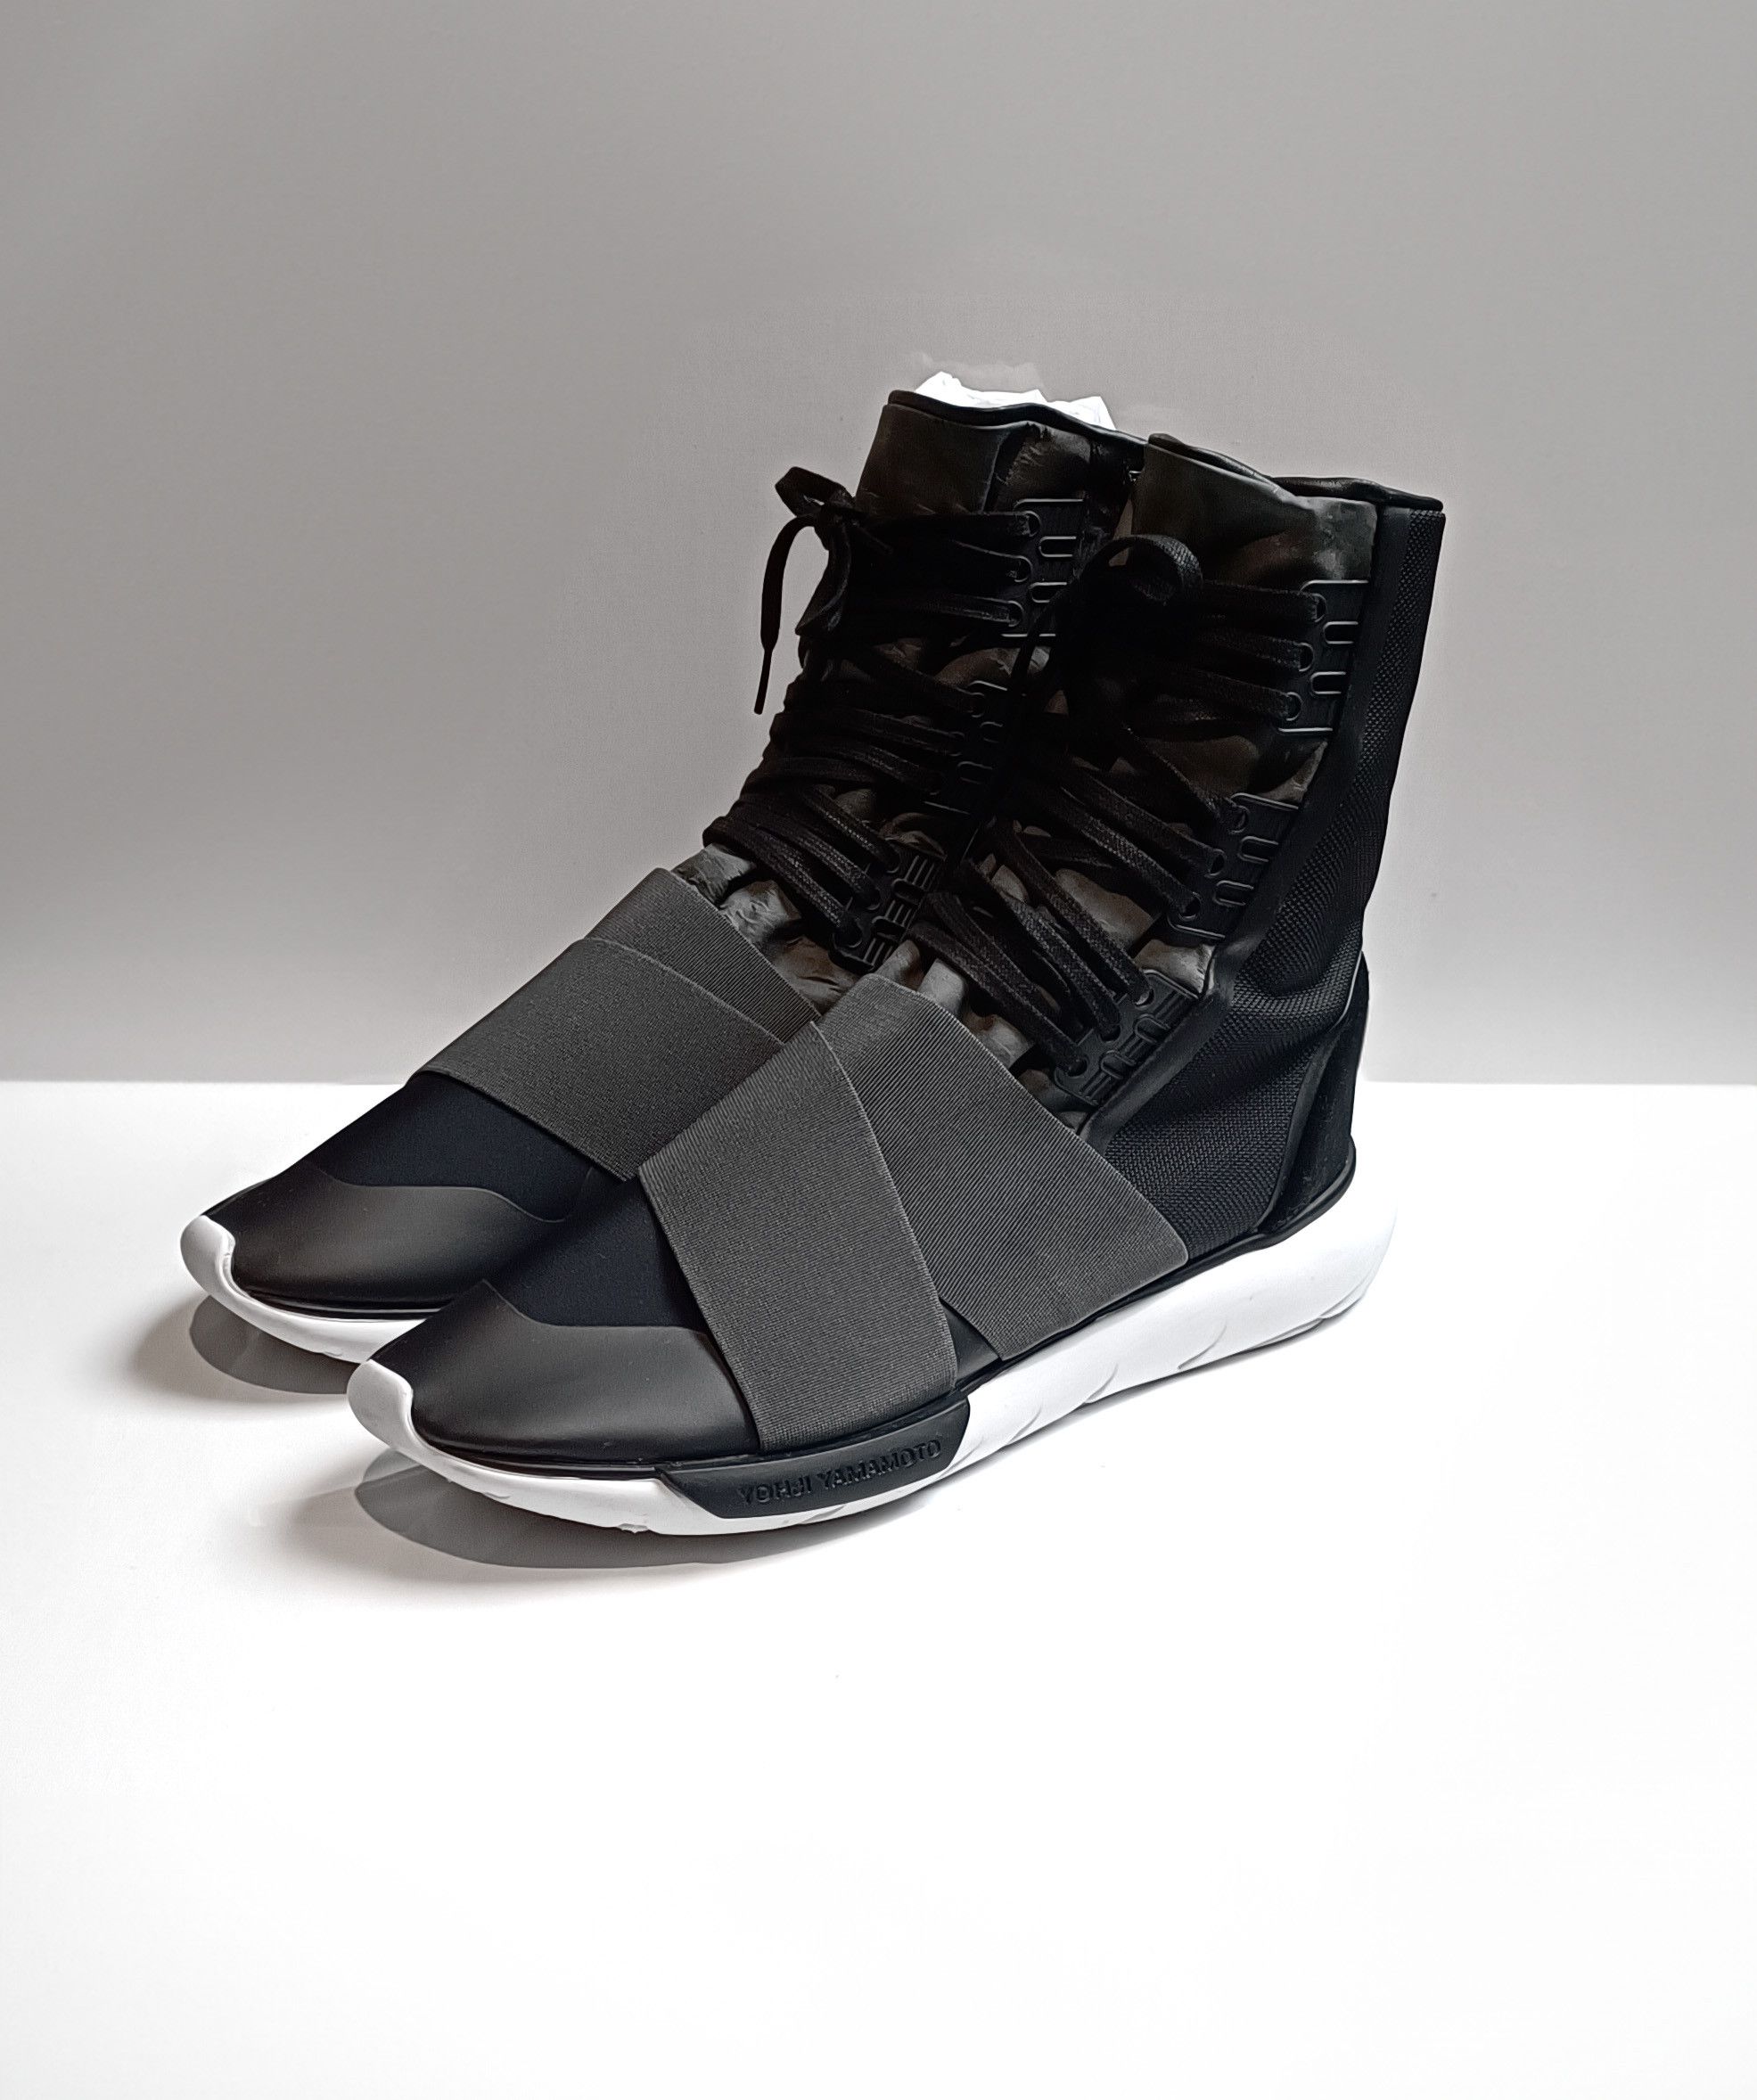 Adidas Y-3 Qasa Boot 'Charcoal Black' - 3